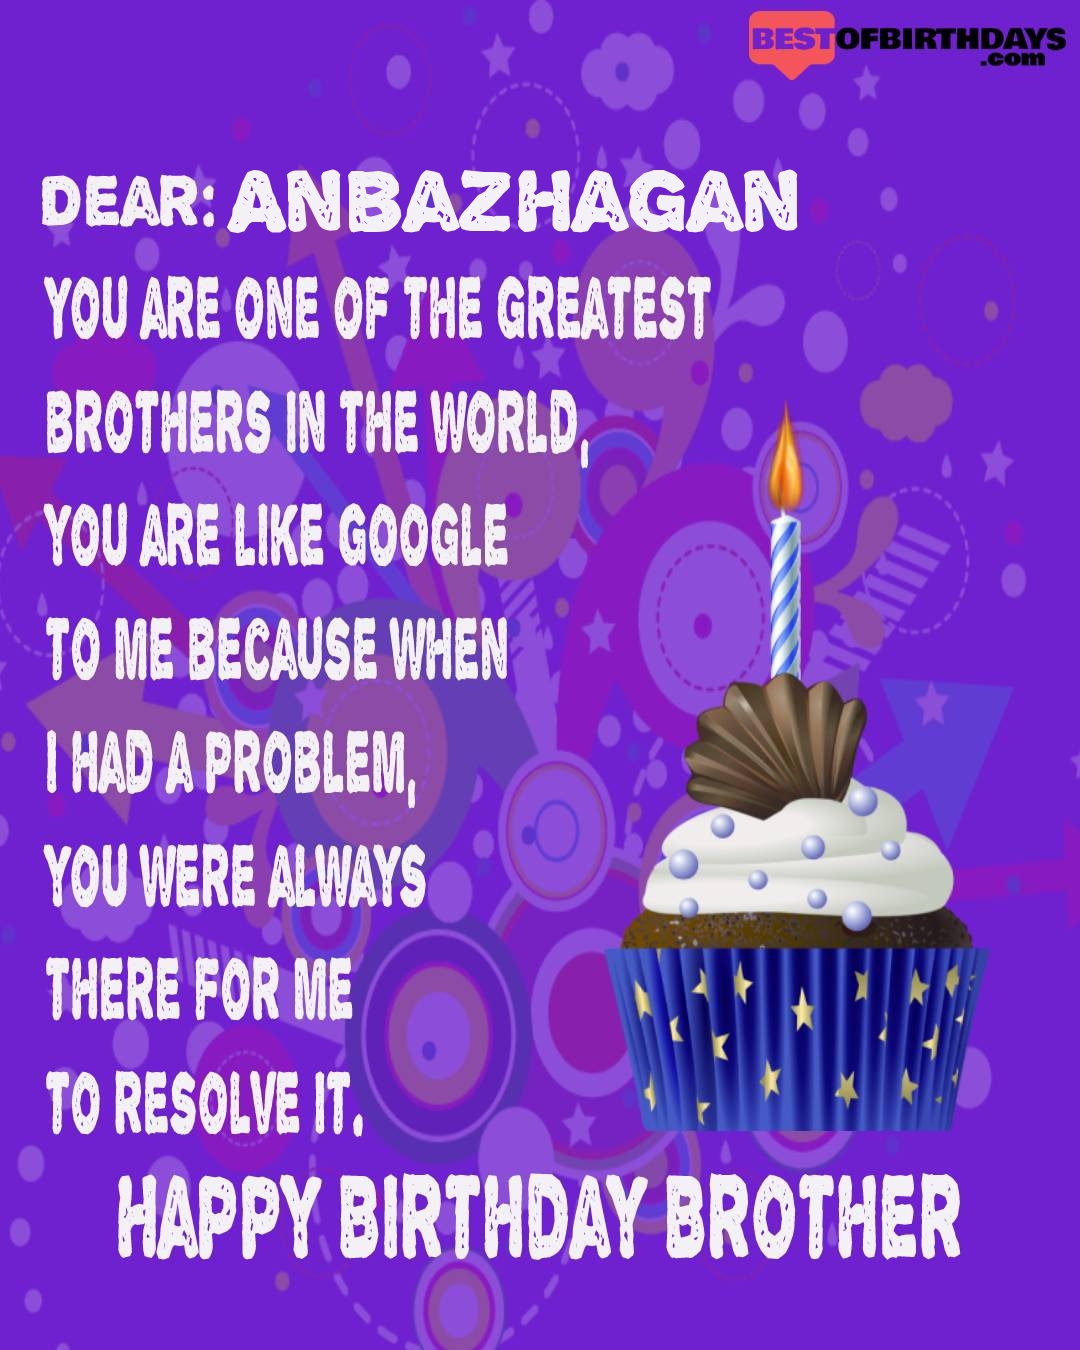 Happy birthday anbazhagan bhai brother bro